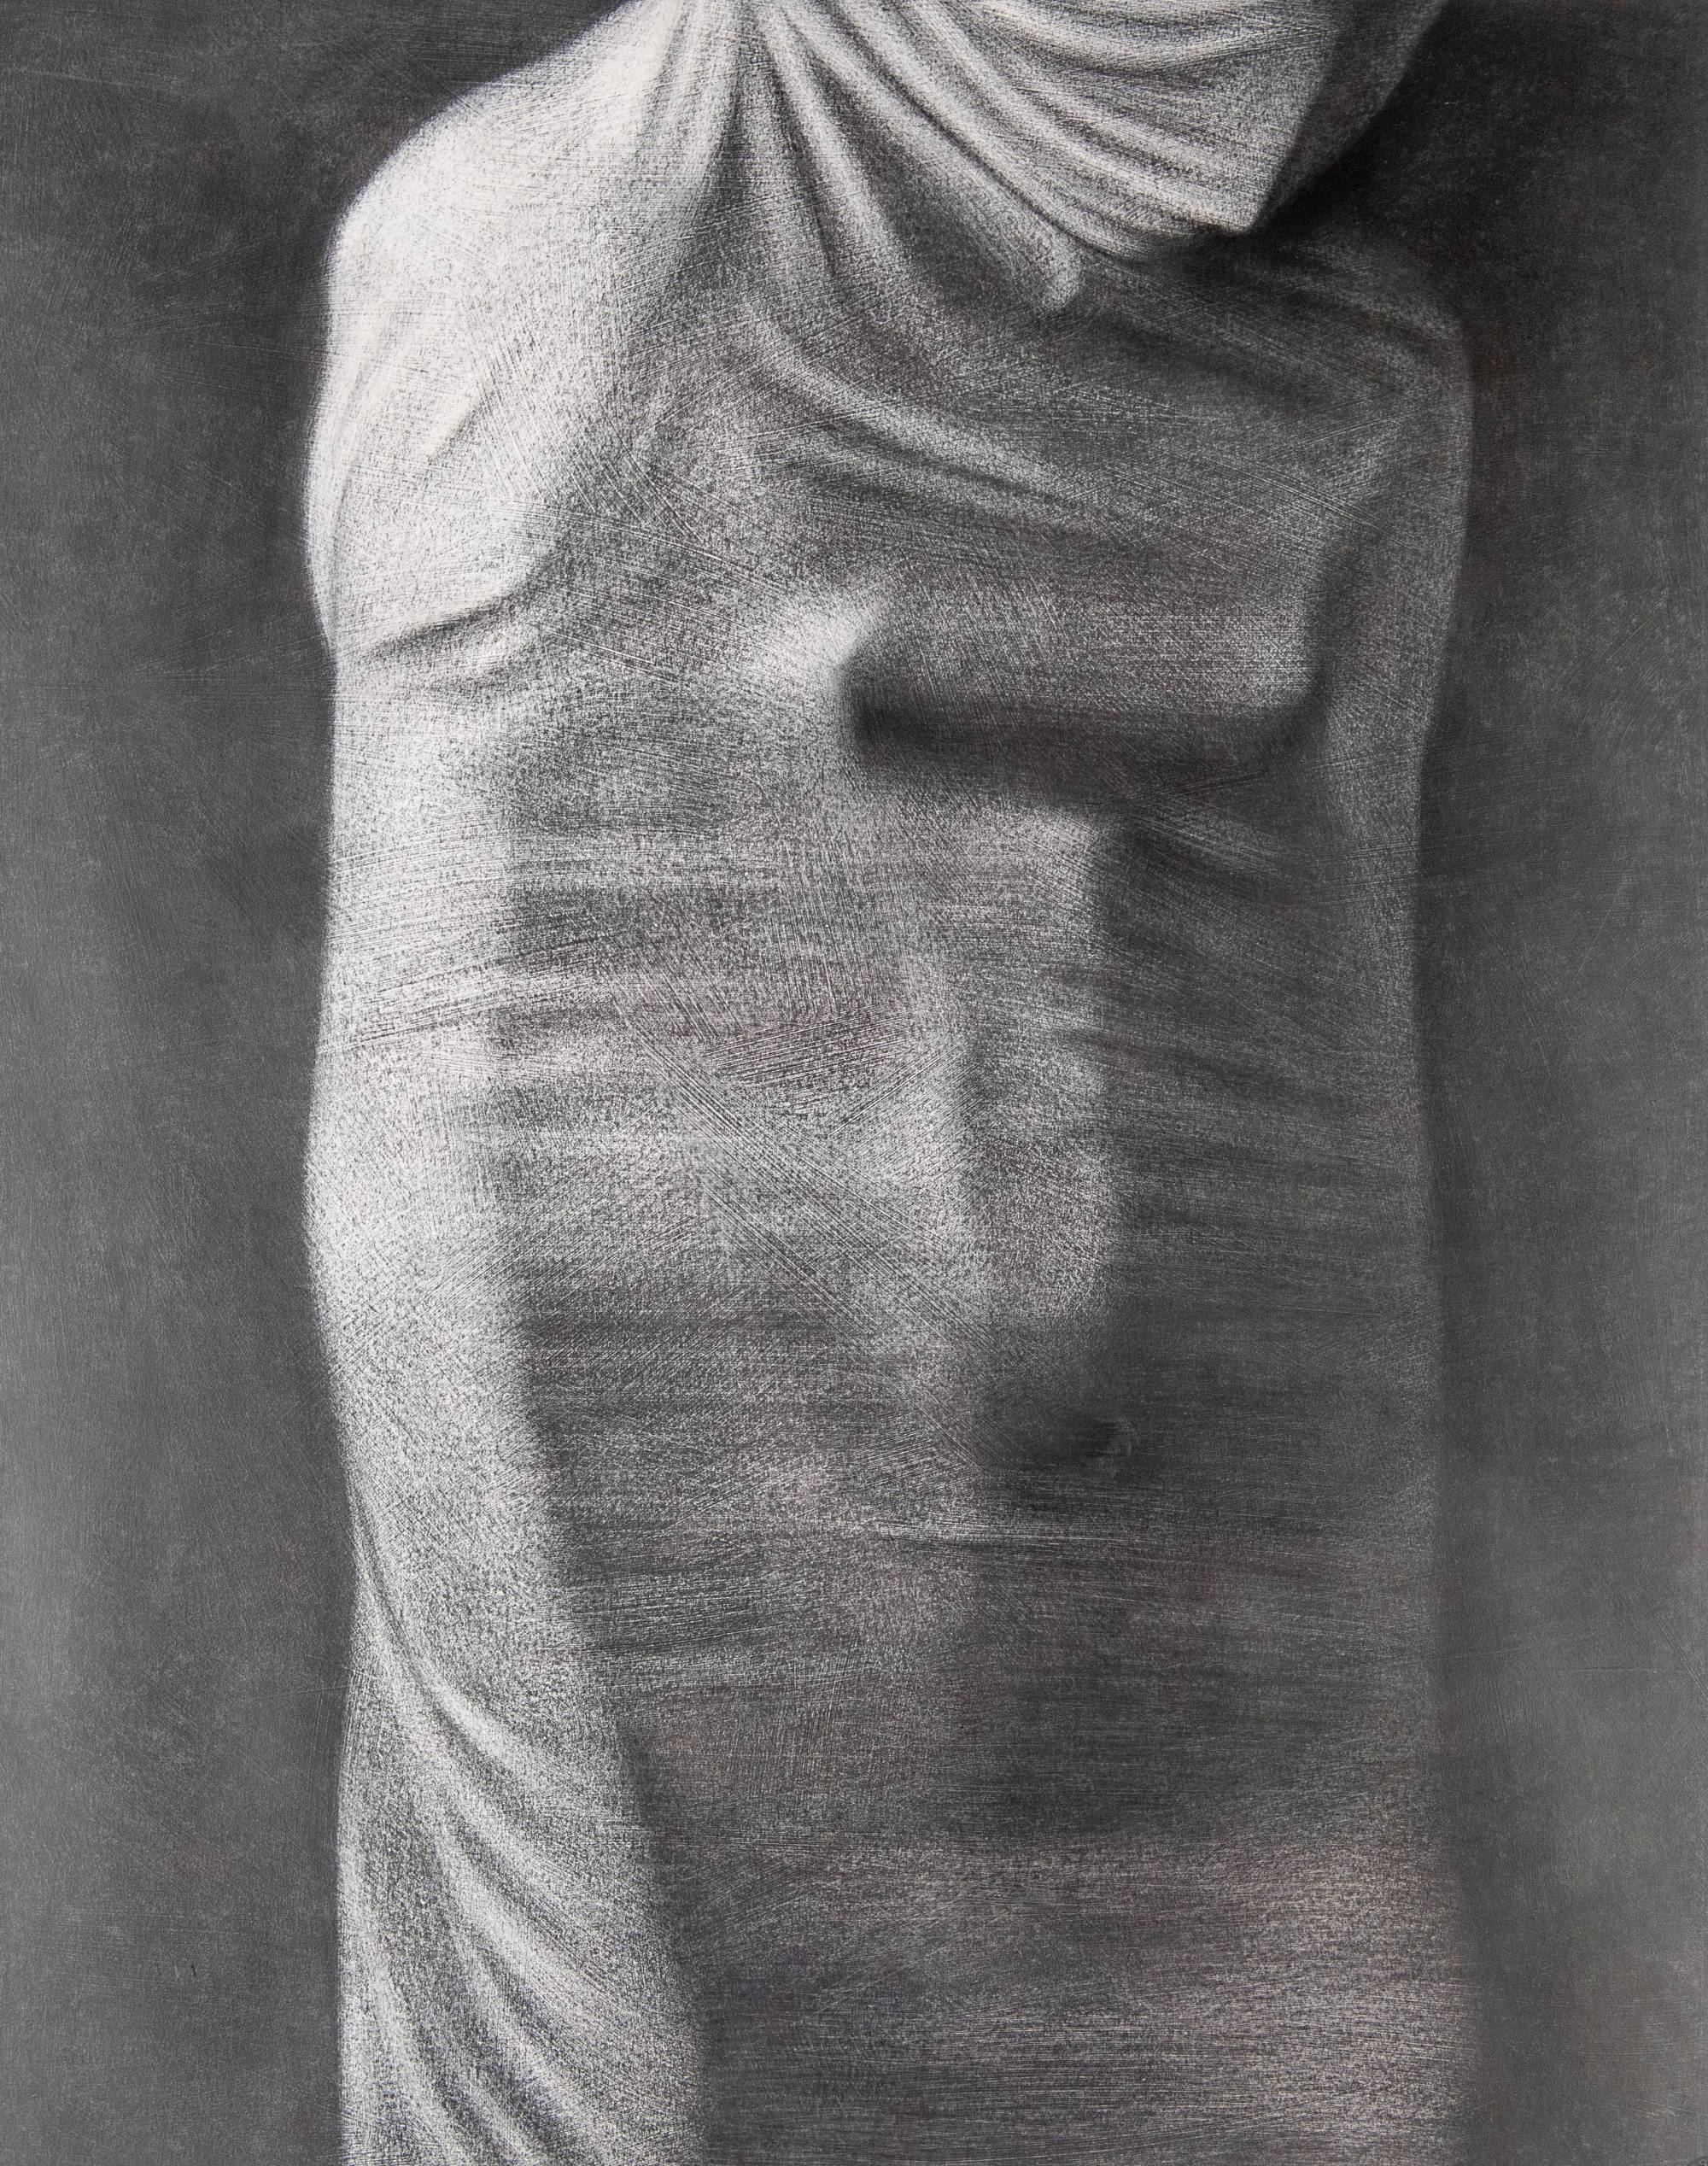 graphite drawing of shrouded female torso